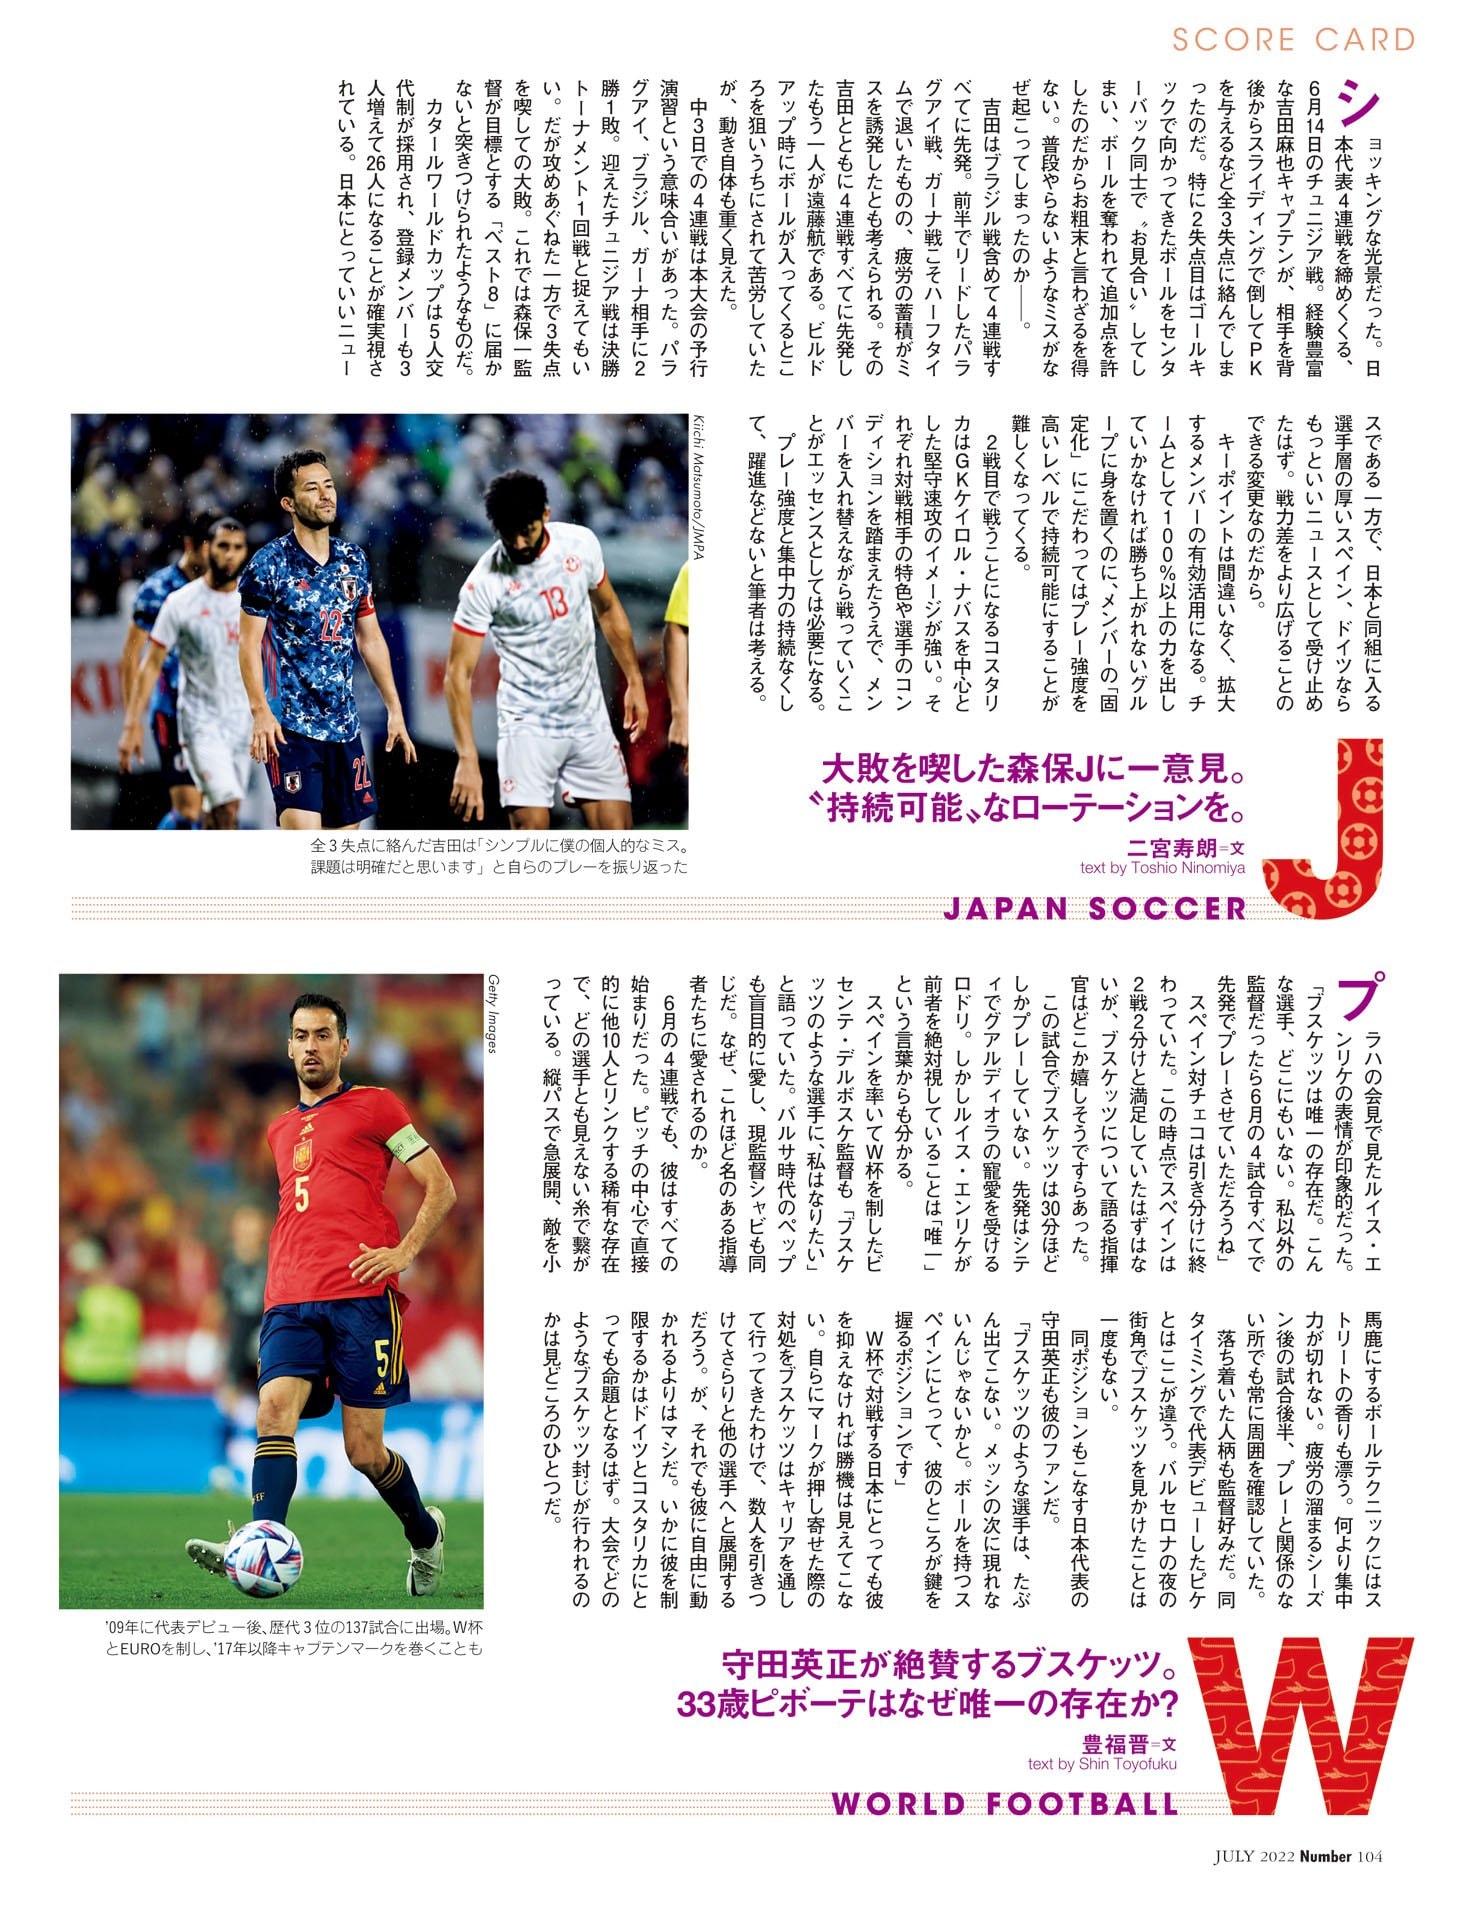 【SCORE CARD】J.SOCCER／WORLD FOOTBALL